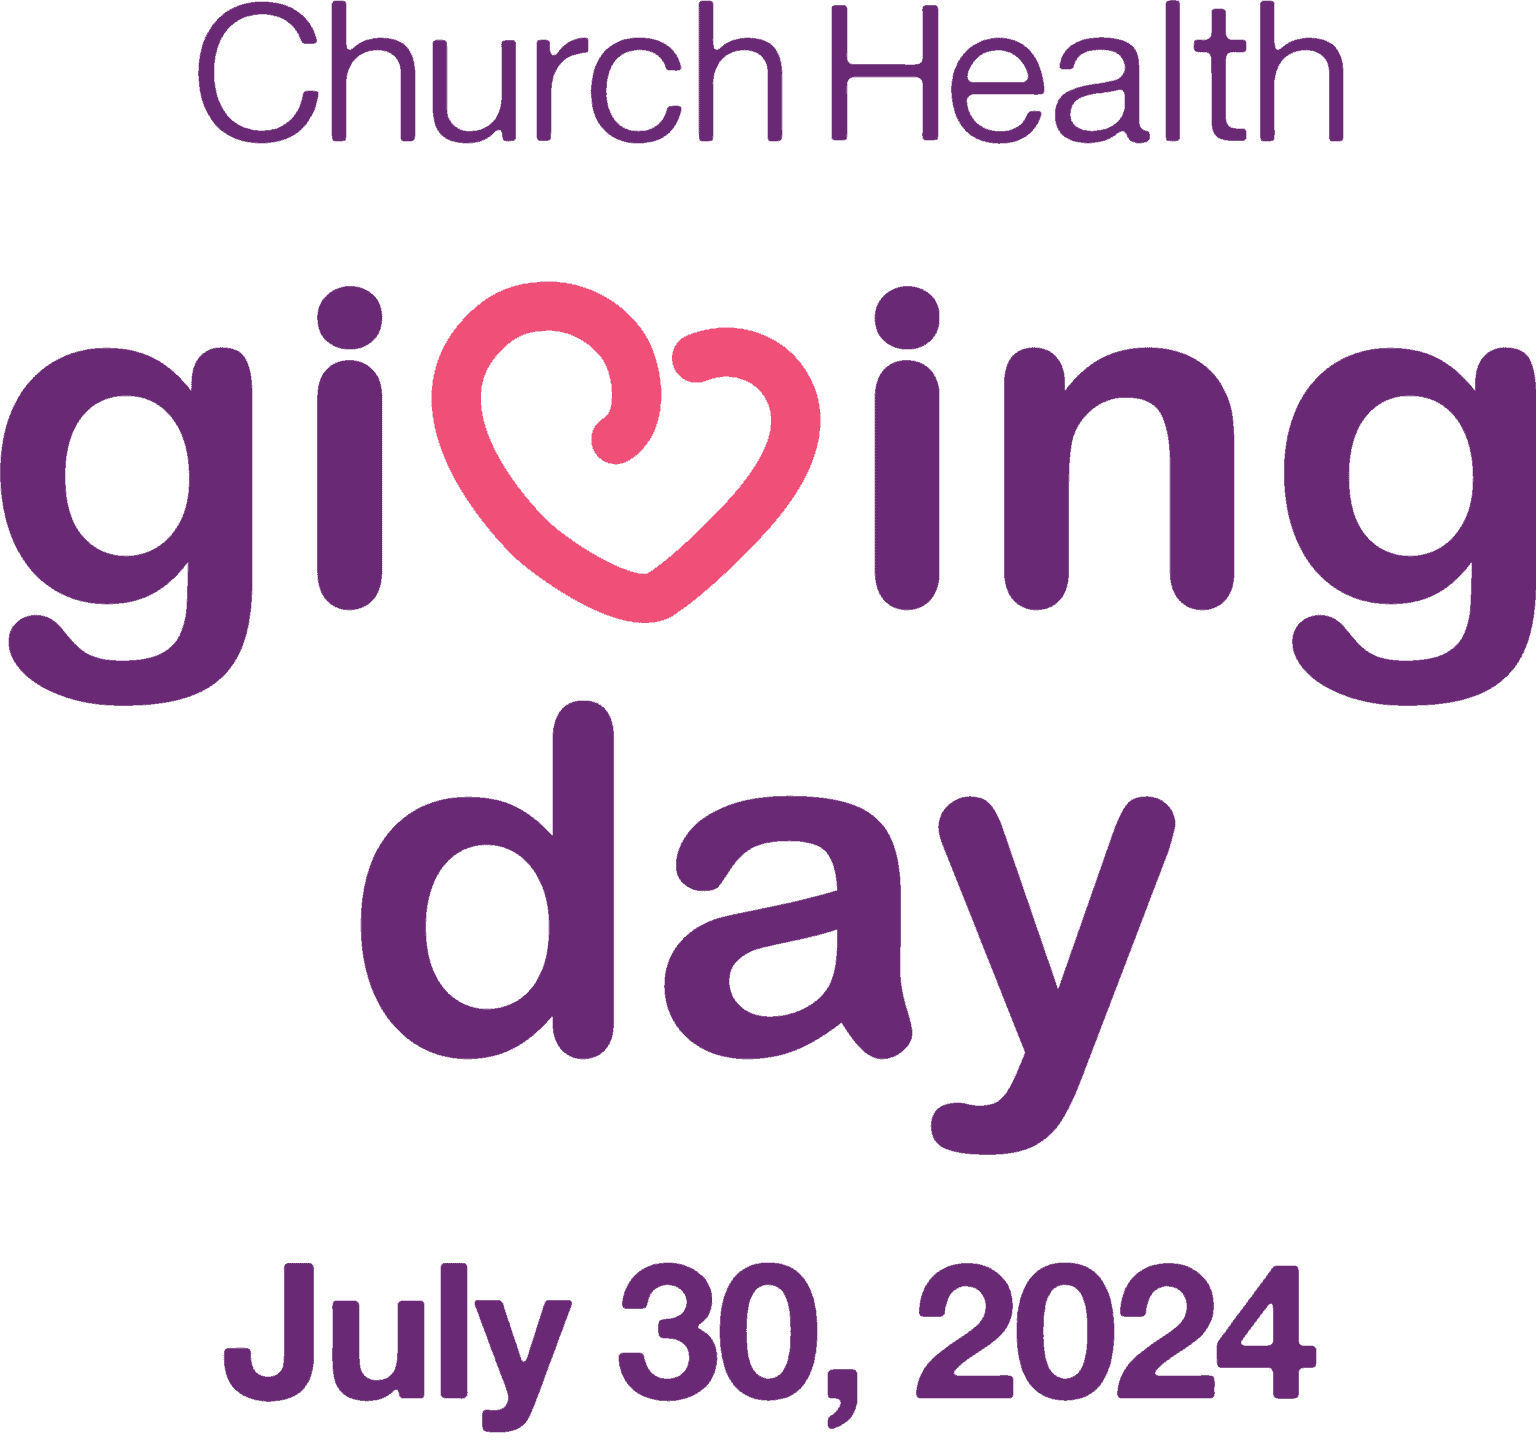 Giving Day 2024 at Church Health Memphis